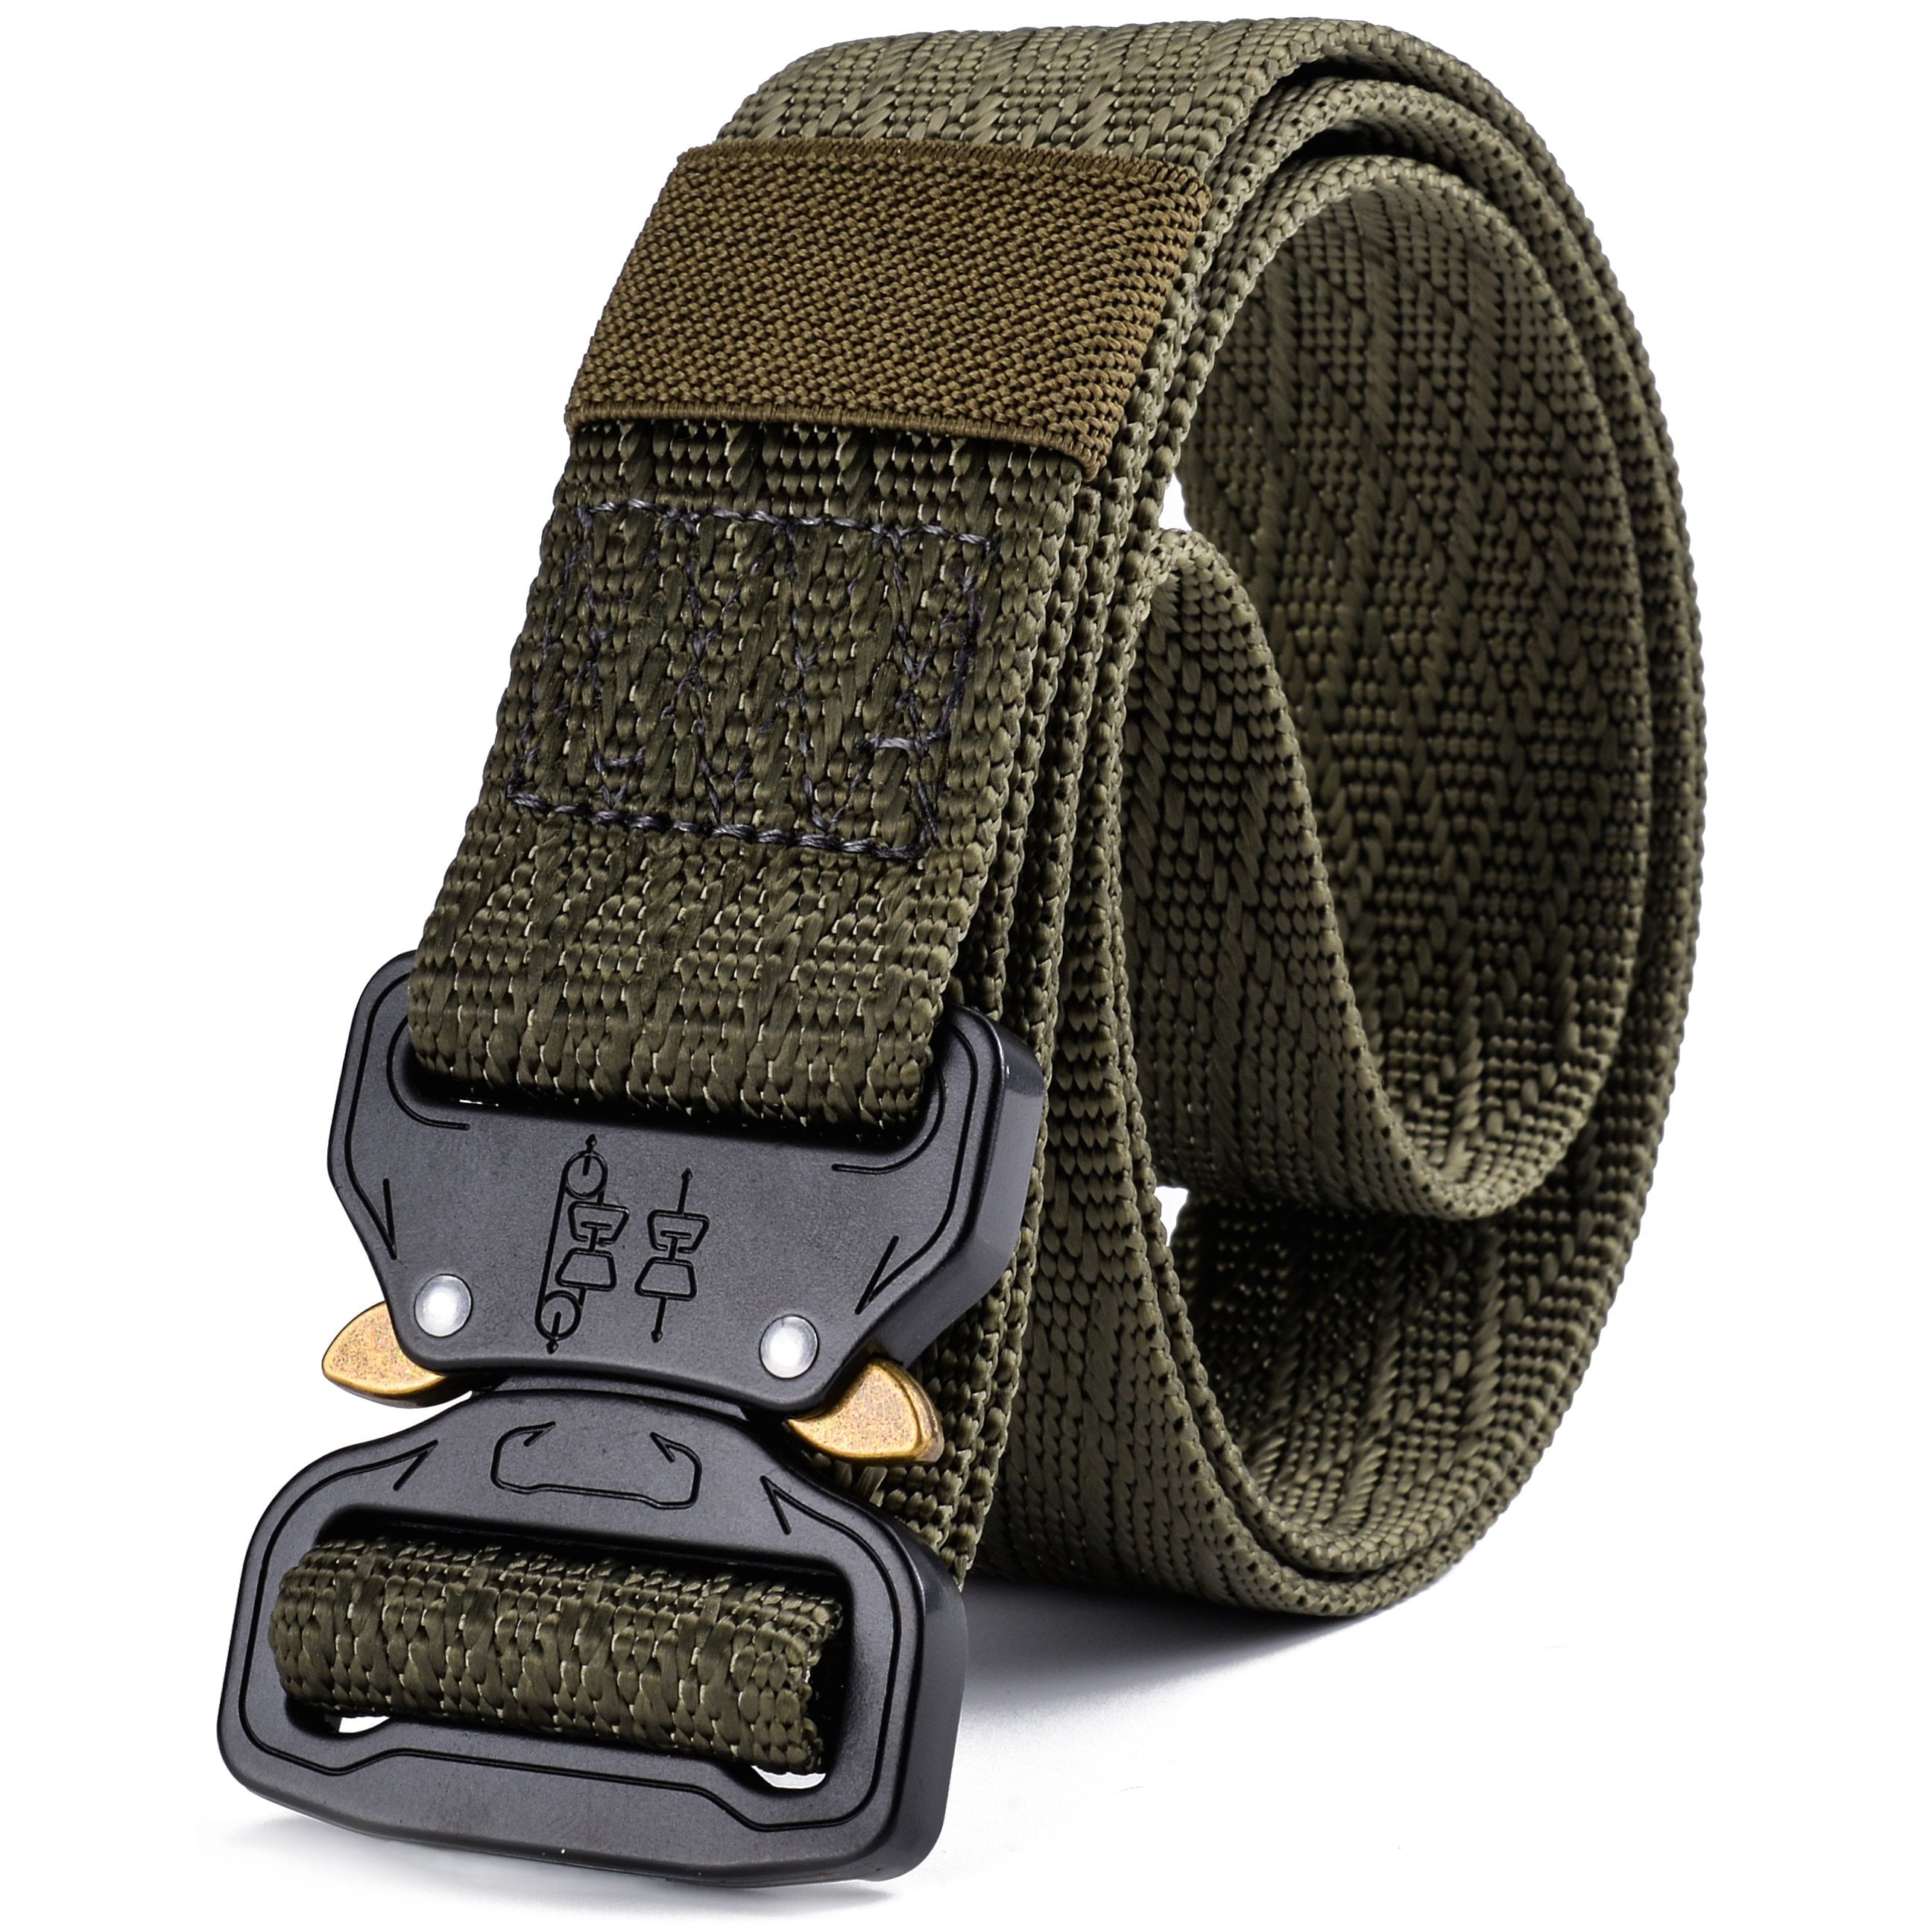 Heavy Duty Work Belt Chaoren 2 Pack Mens Quick Release Tactical Belt 1.5 Casual Military Riggers Web Belts for Men 